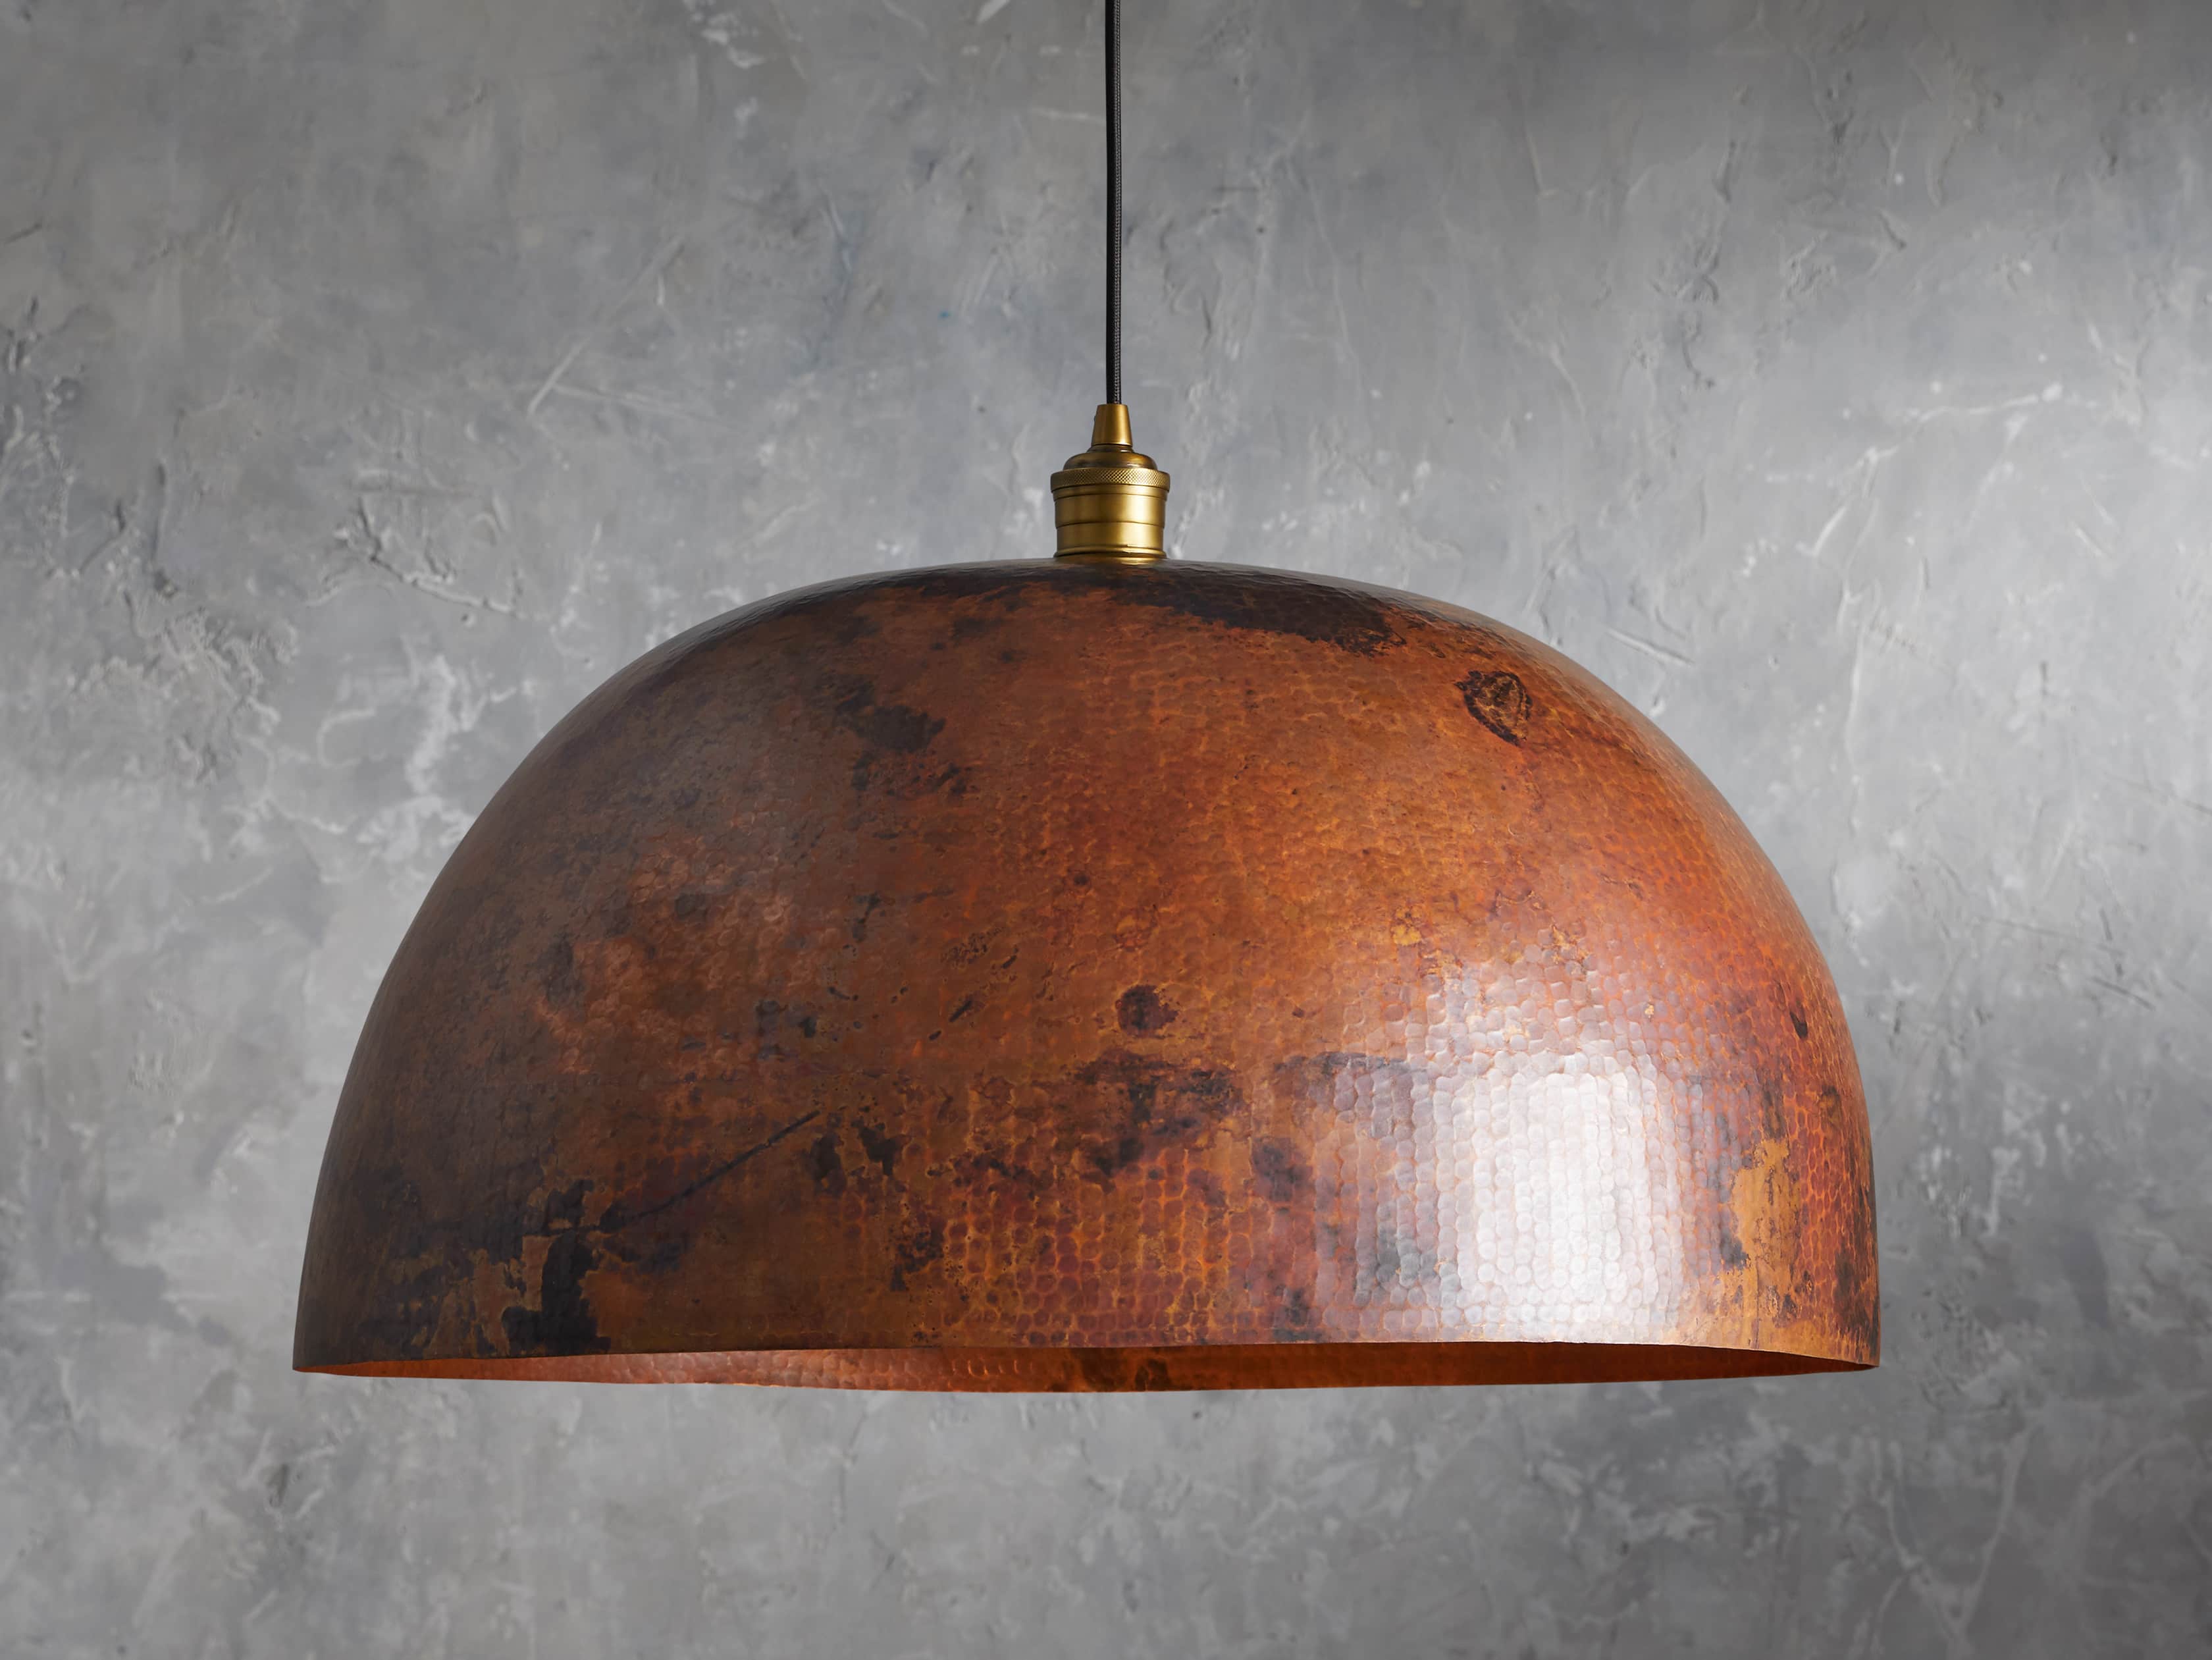 Dome Copper Pendant Arhaus - Copper Pendant Ceiling Light Fitting Instructions Pdf